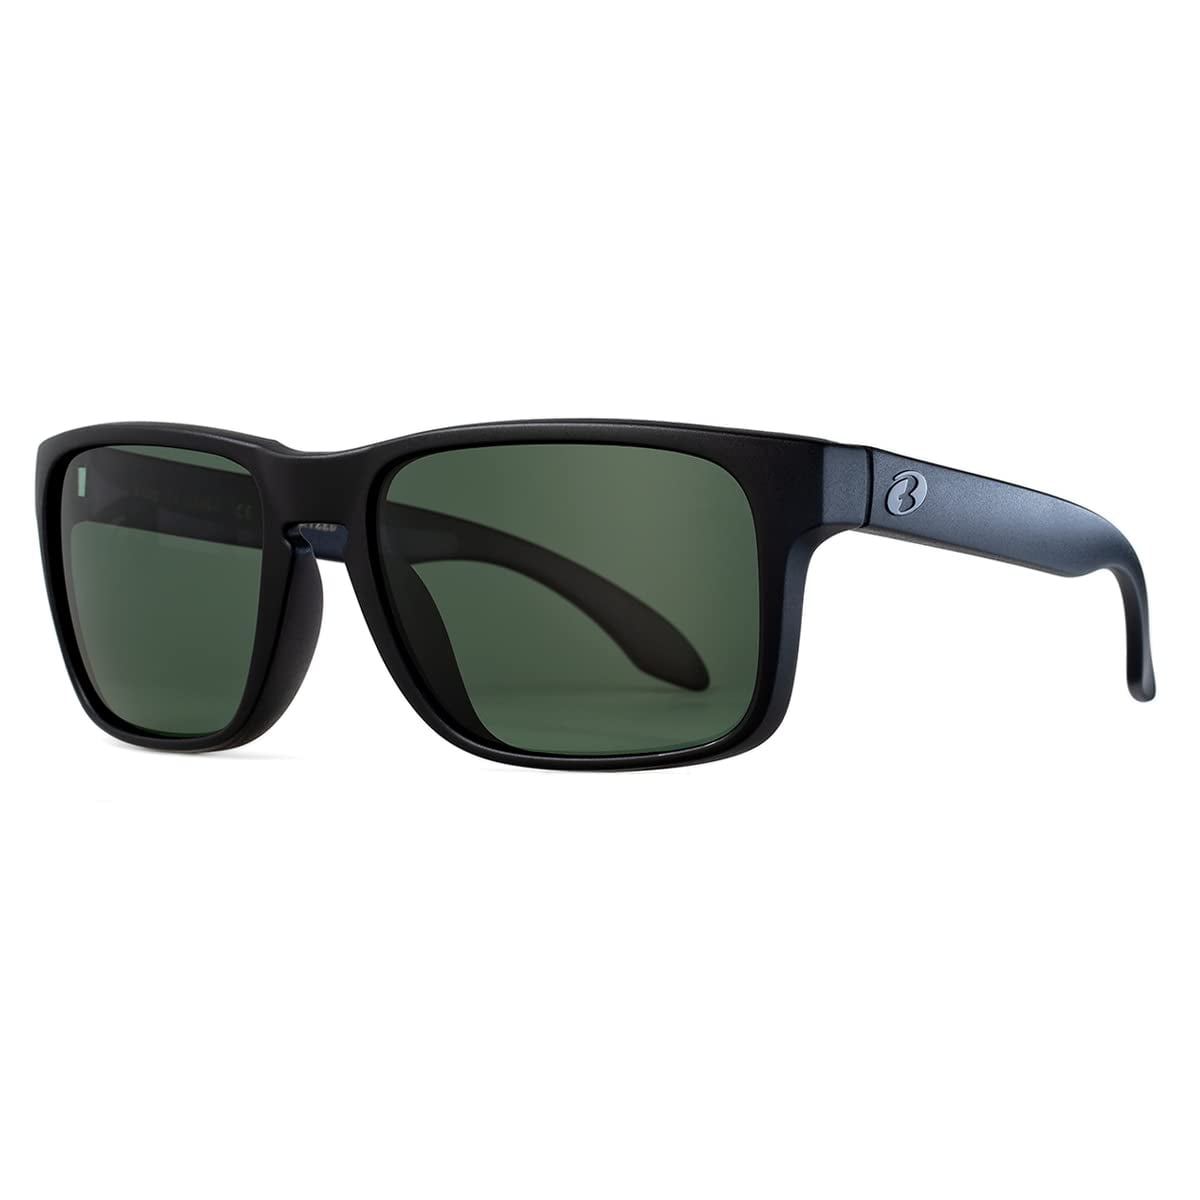 Bnus Round Titanium frame corning glass lens polarized sunglasses for men women shades UV400 protection 